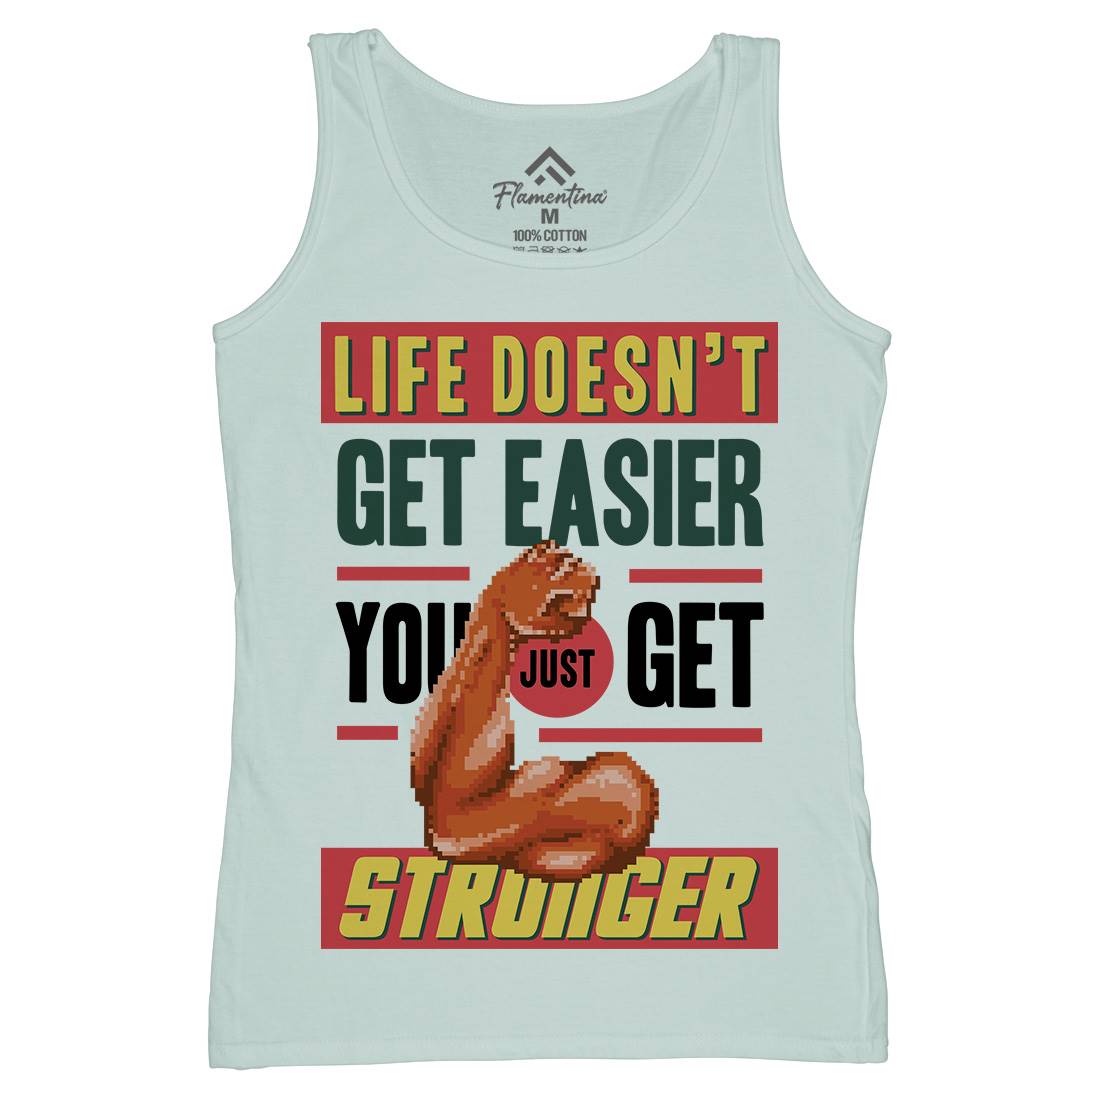 Get Stronger Womens Organic Tank Top Vest Gym B904